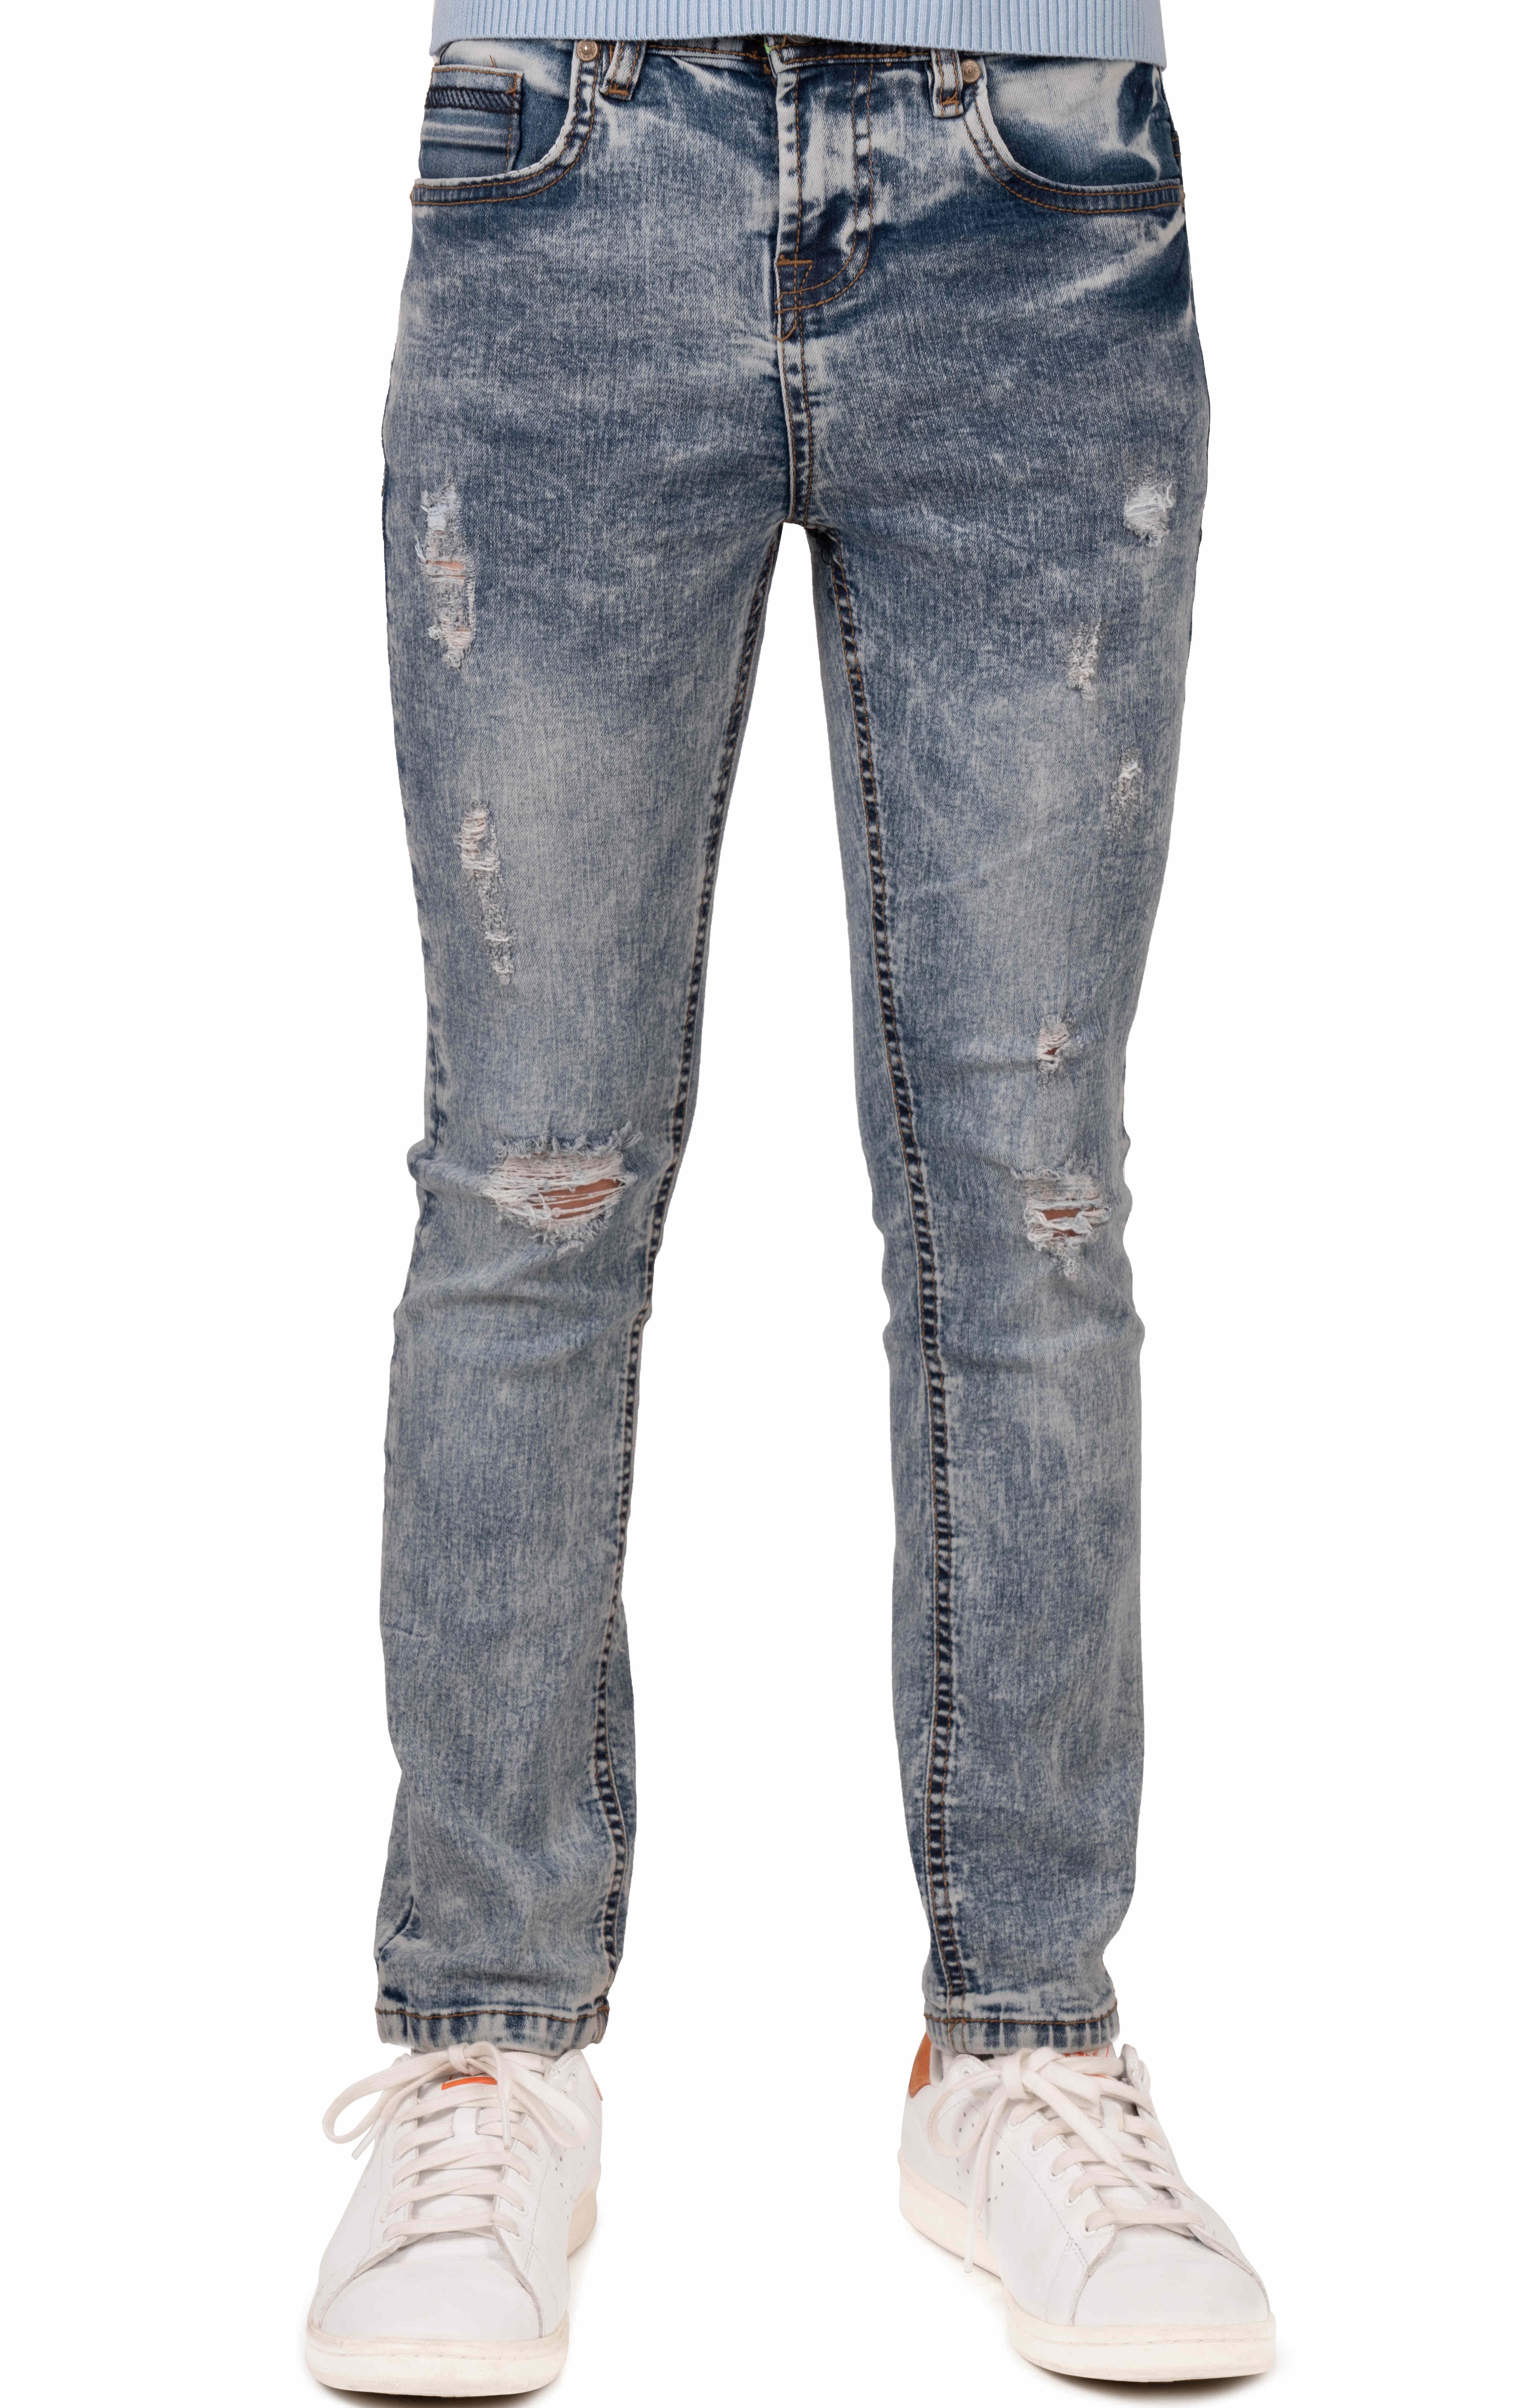 Boys beautiful jeans | Denim pants fashion, Denim fashion, Boys jeans